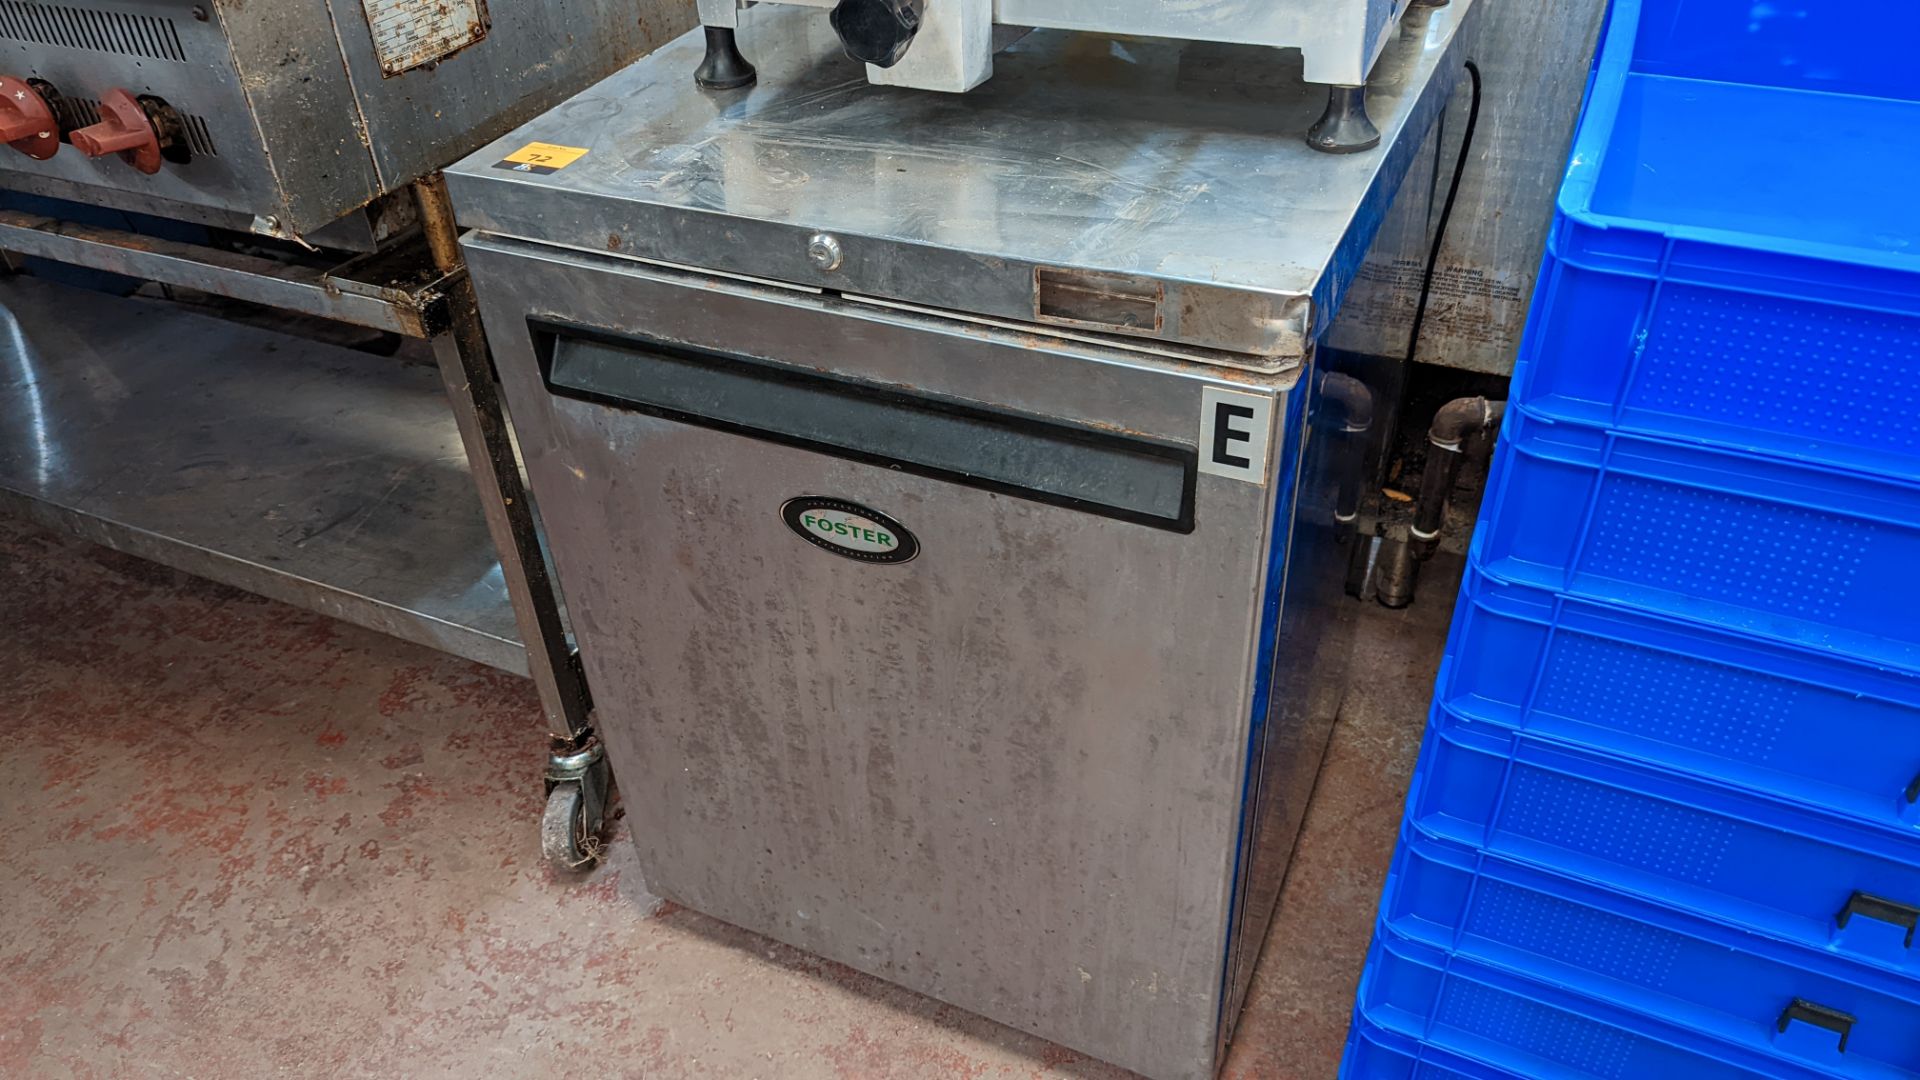 Foster stainless steel under counter fridge model HR150-A